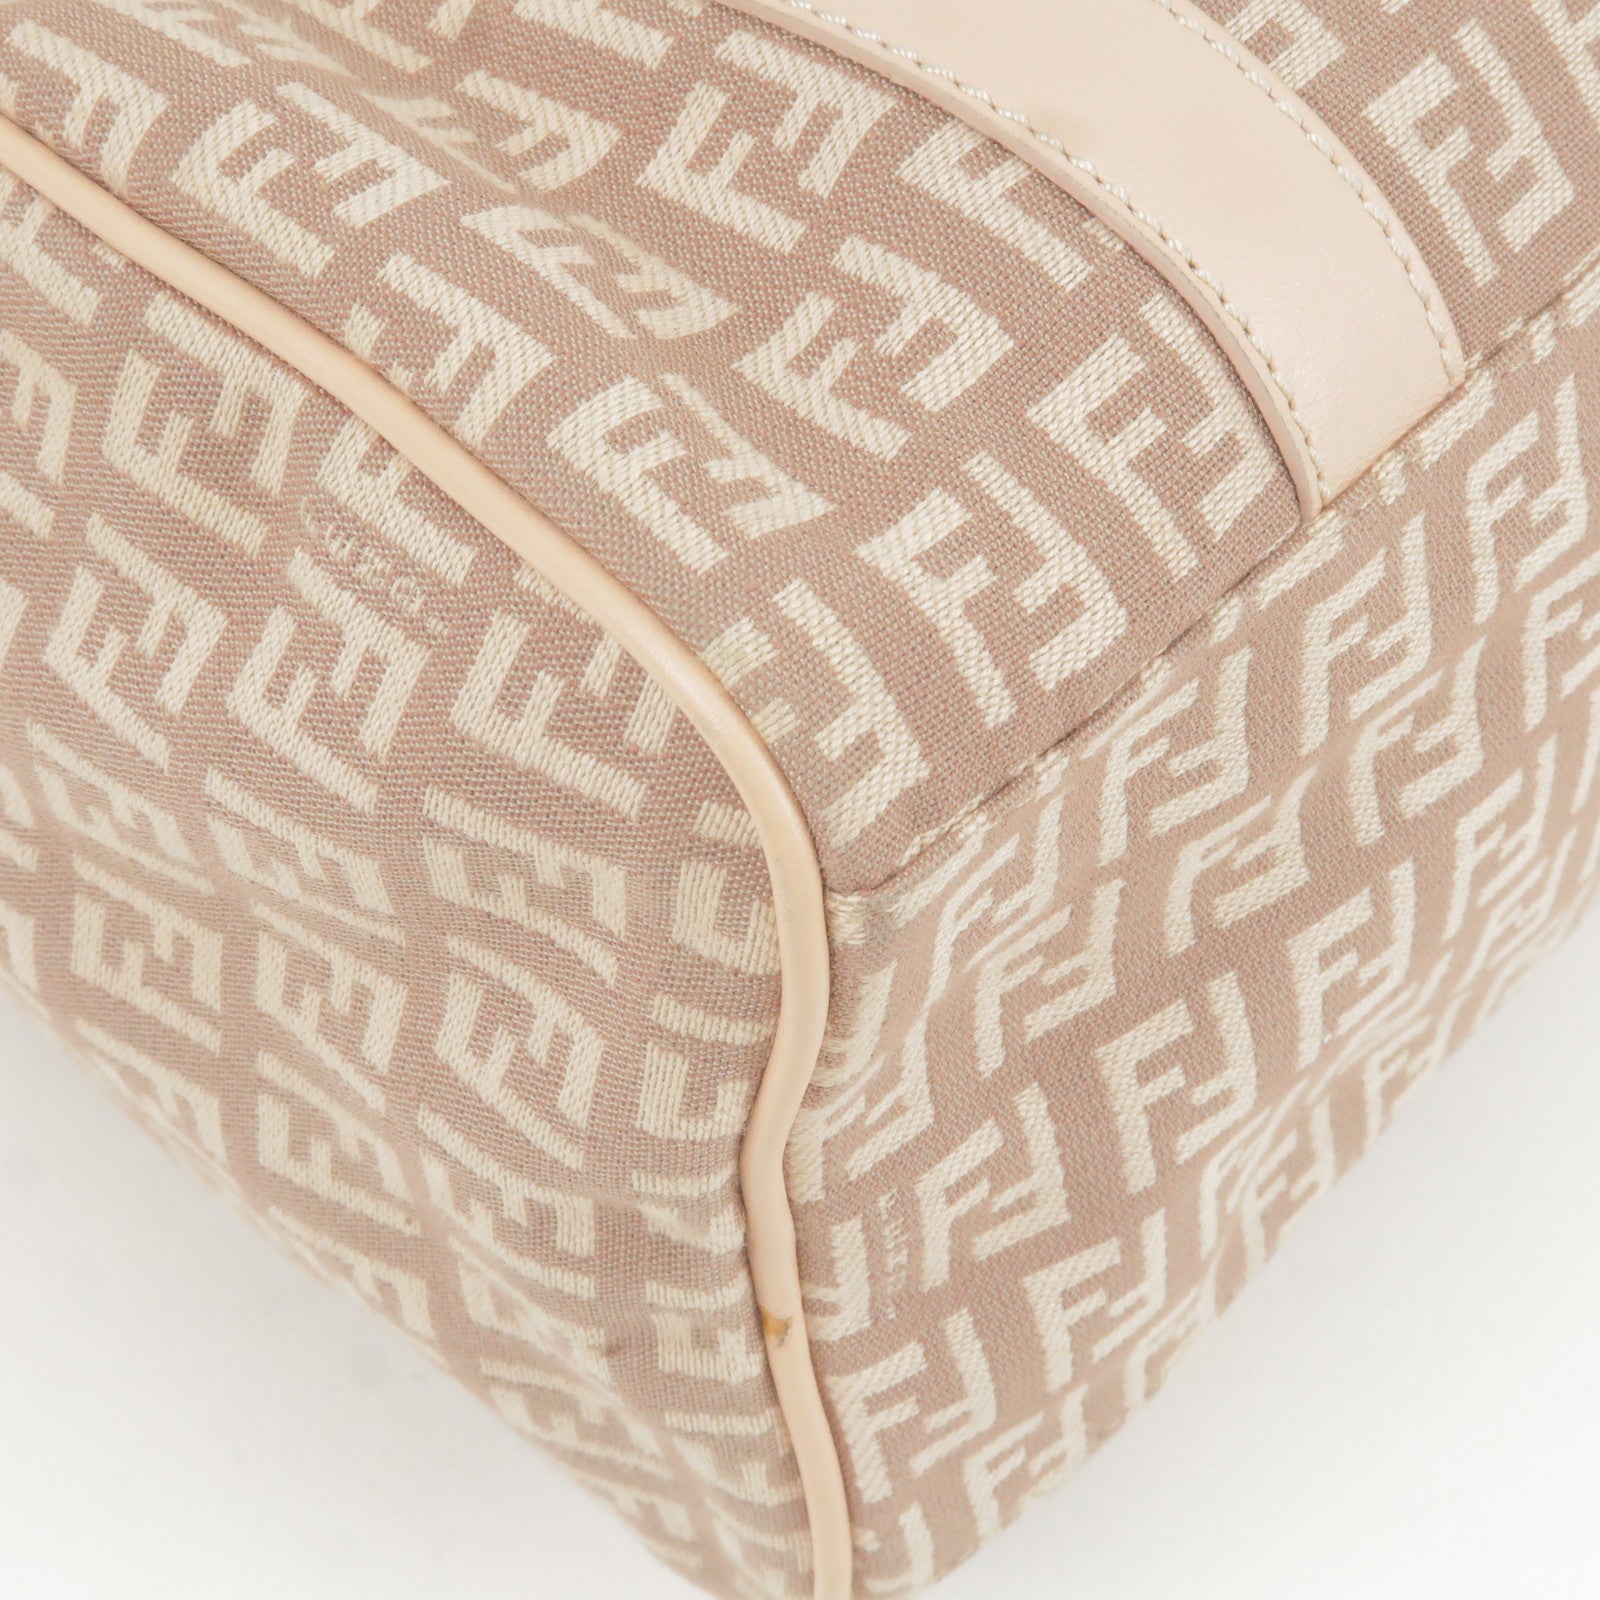 FENDI-Zucchino-Canvas-Leather-Mini-Boston-Bag-Pink-8BL068 – dct